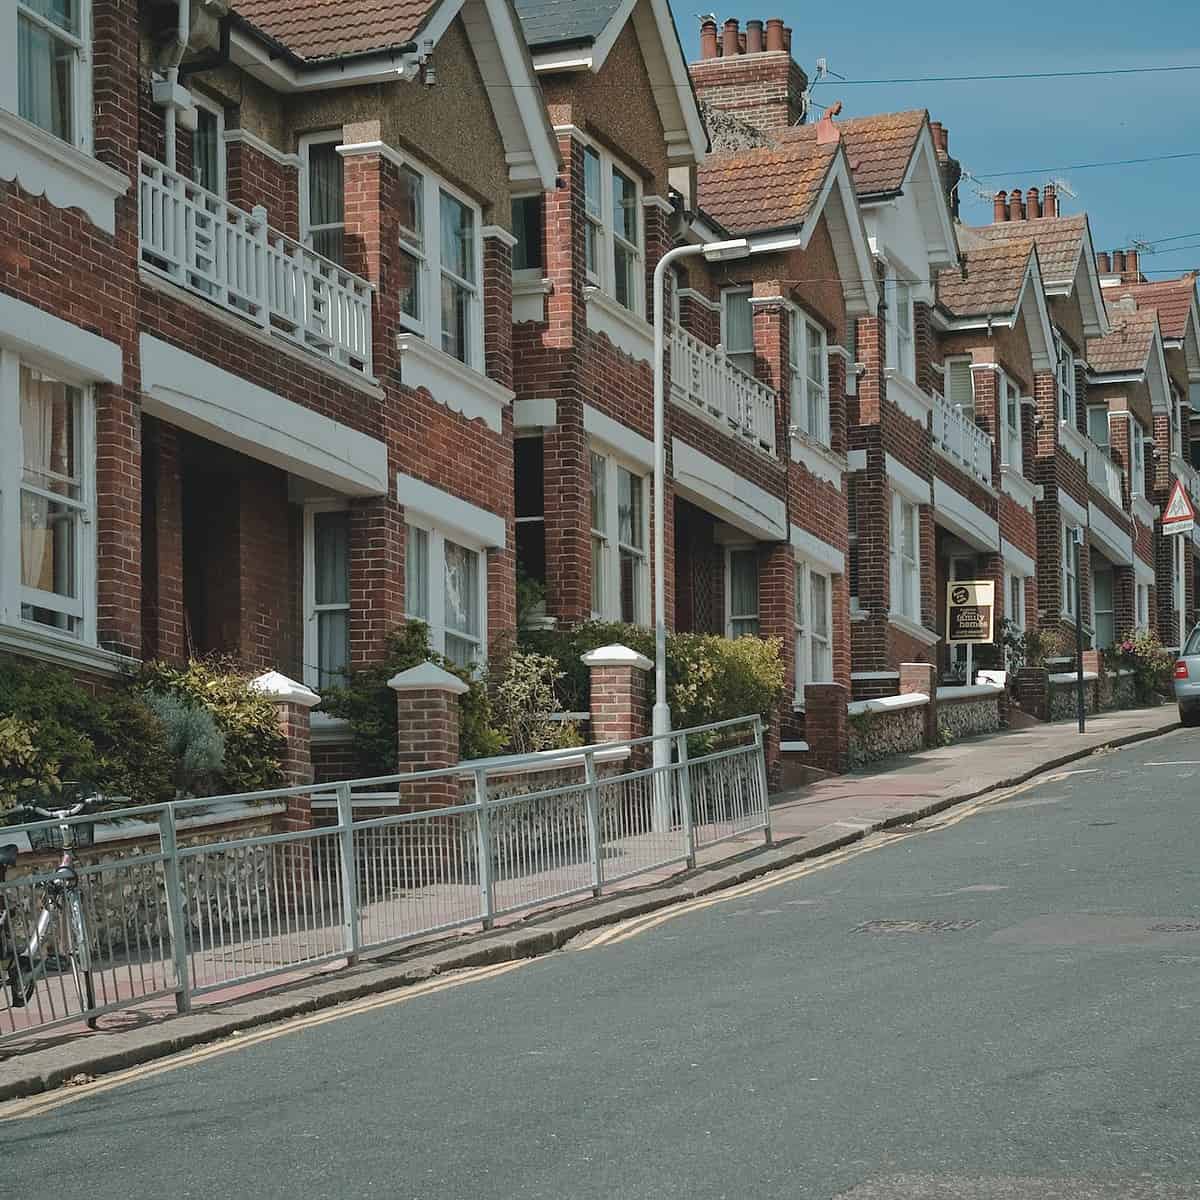 A residential street in Brighton